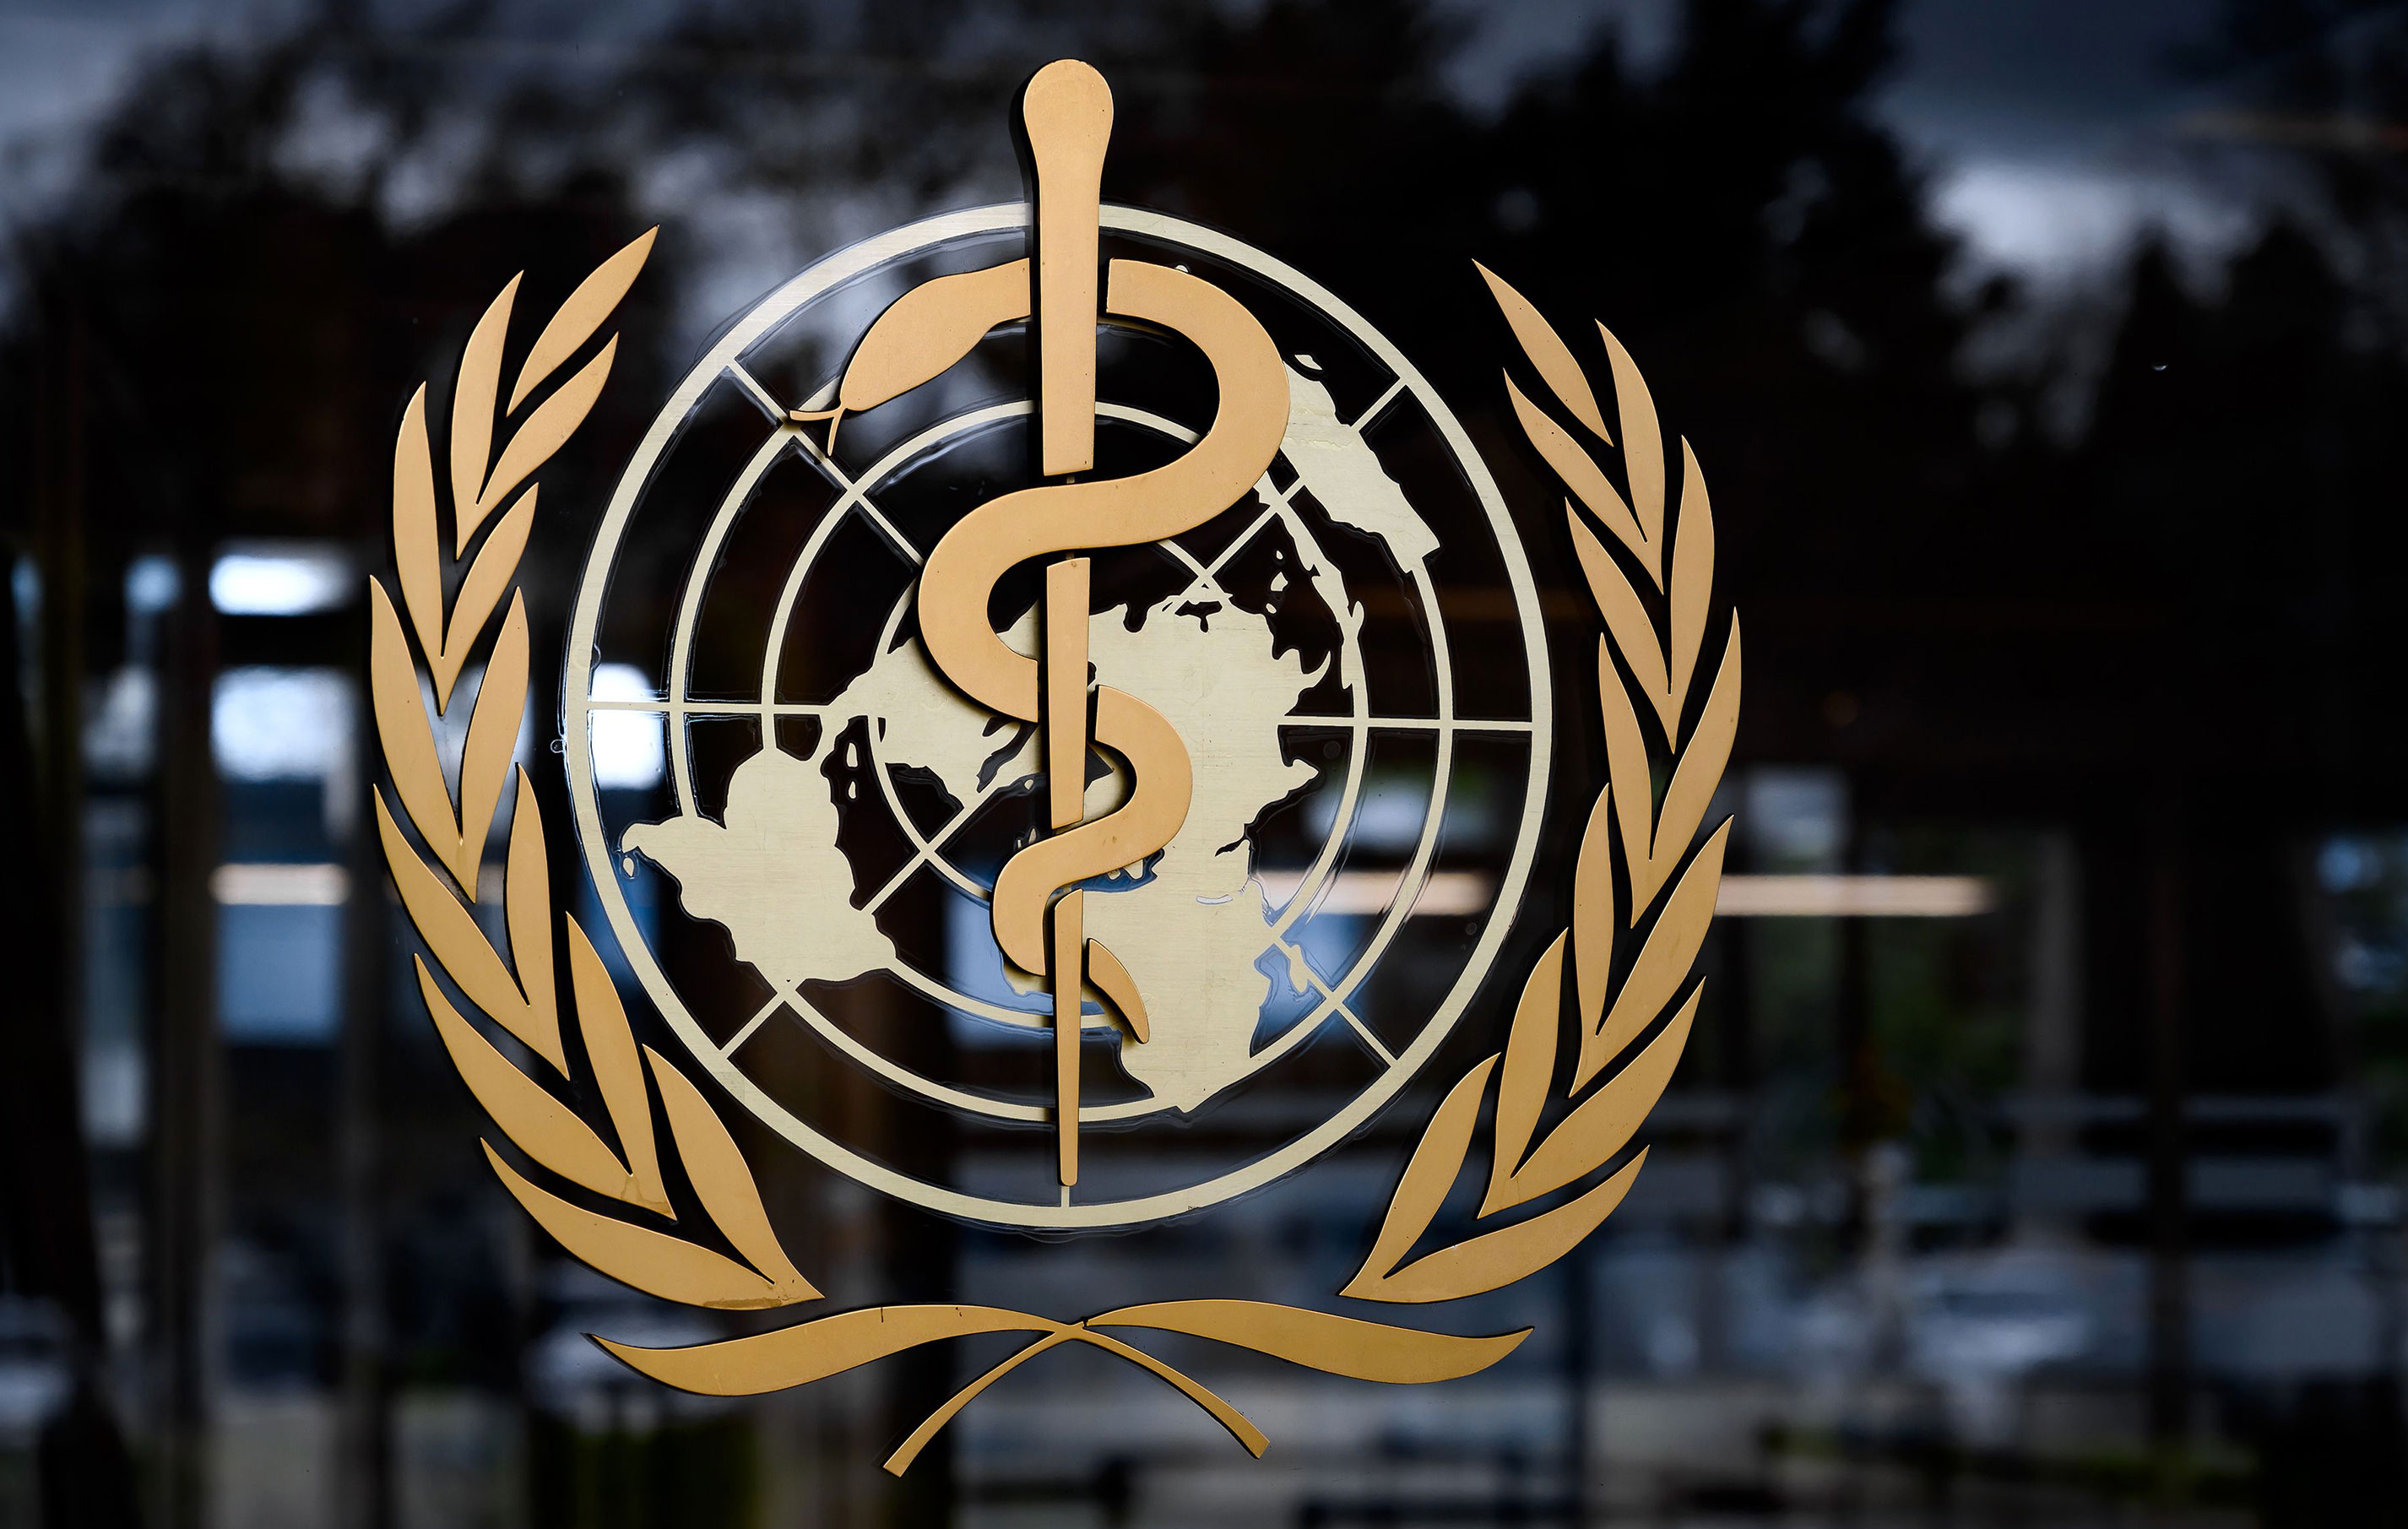 The World Health Organization logo is seen at their headquarters in Geneva, Switzerland on March 9.